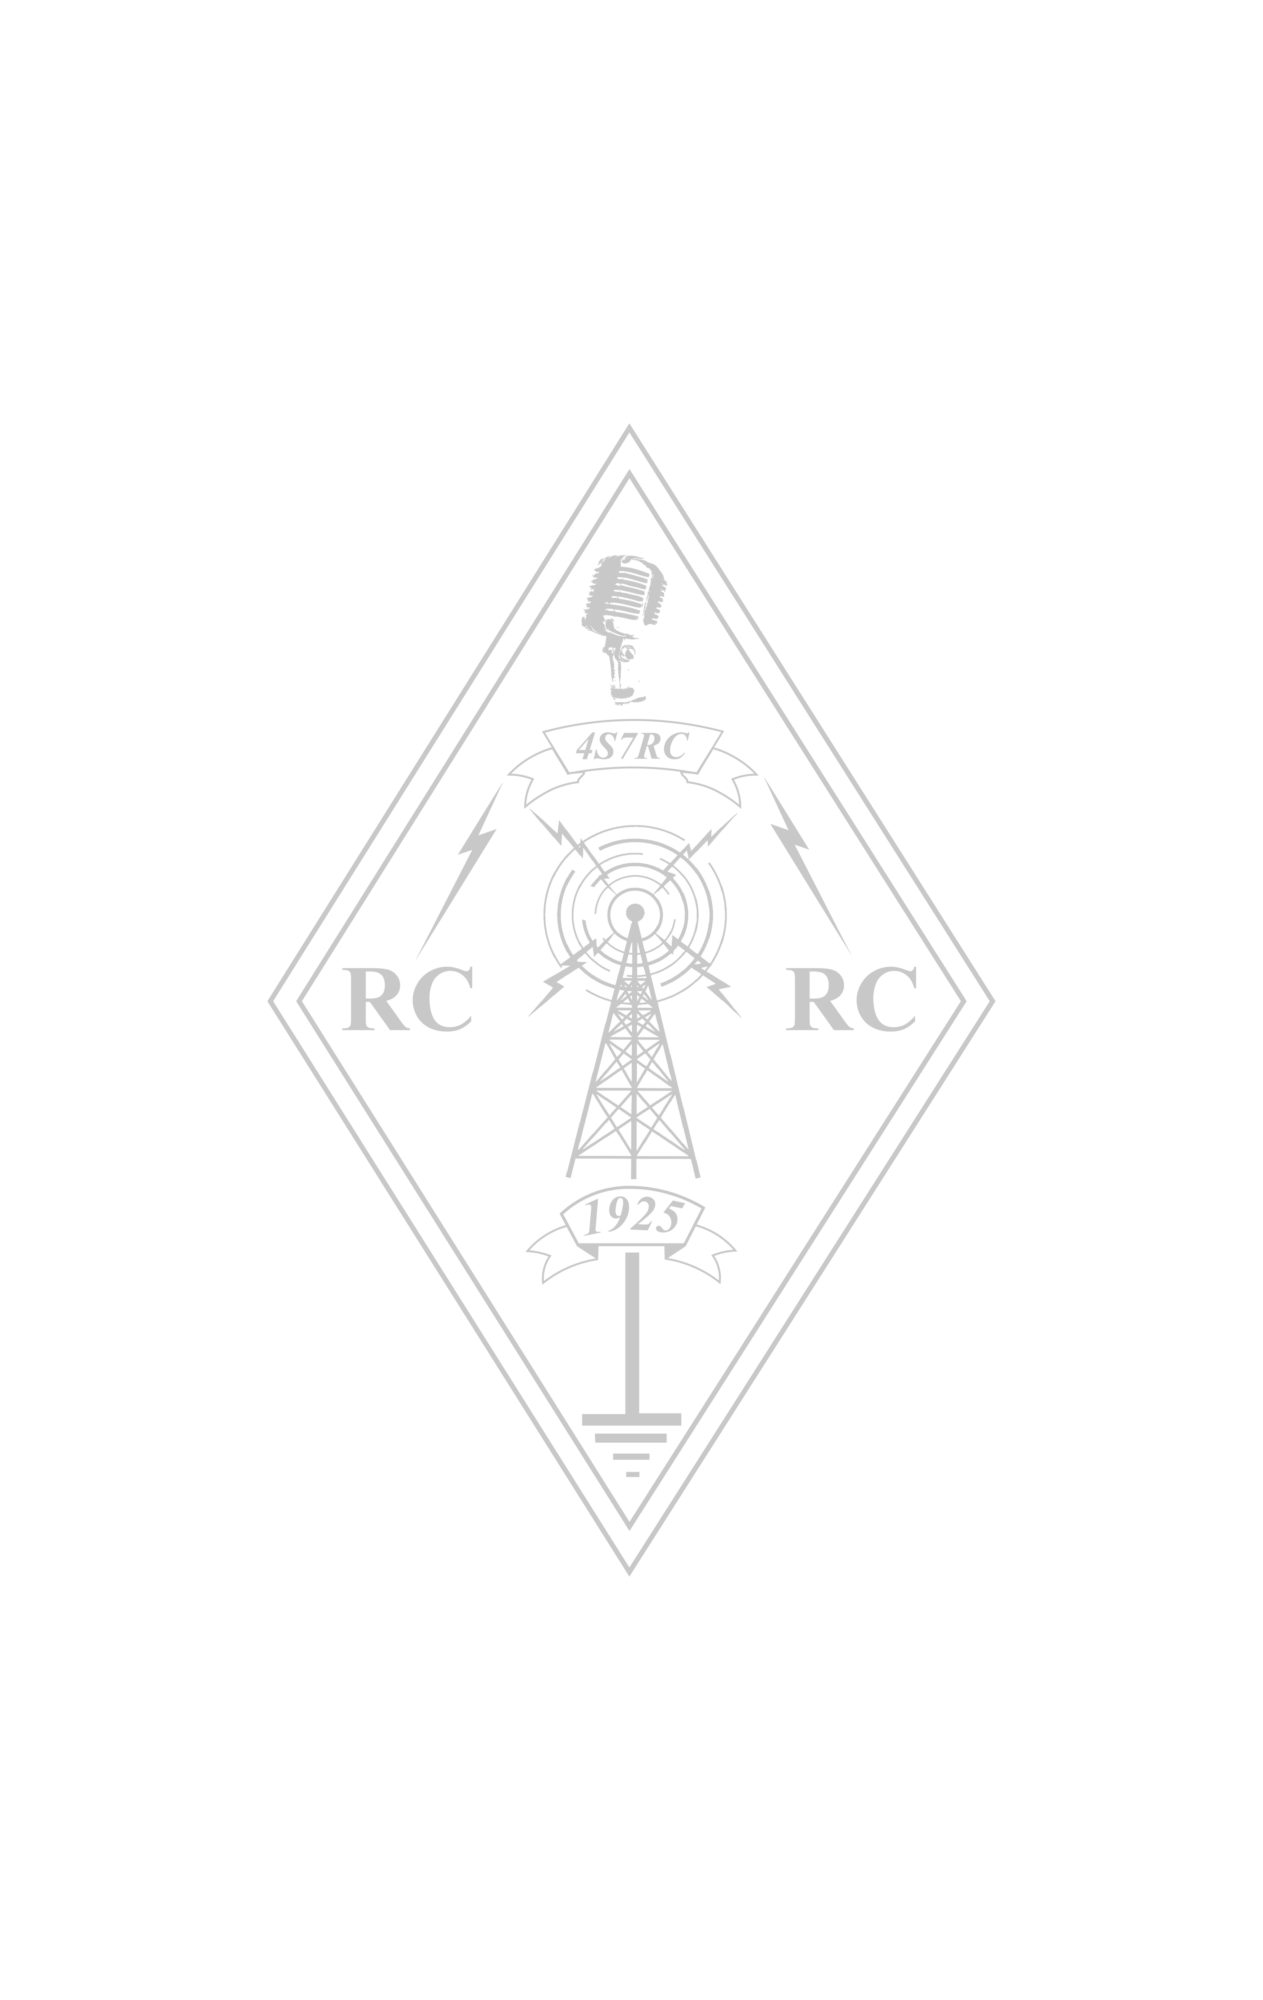 radio club logo - The Royal College